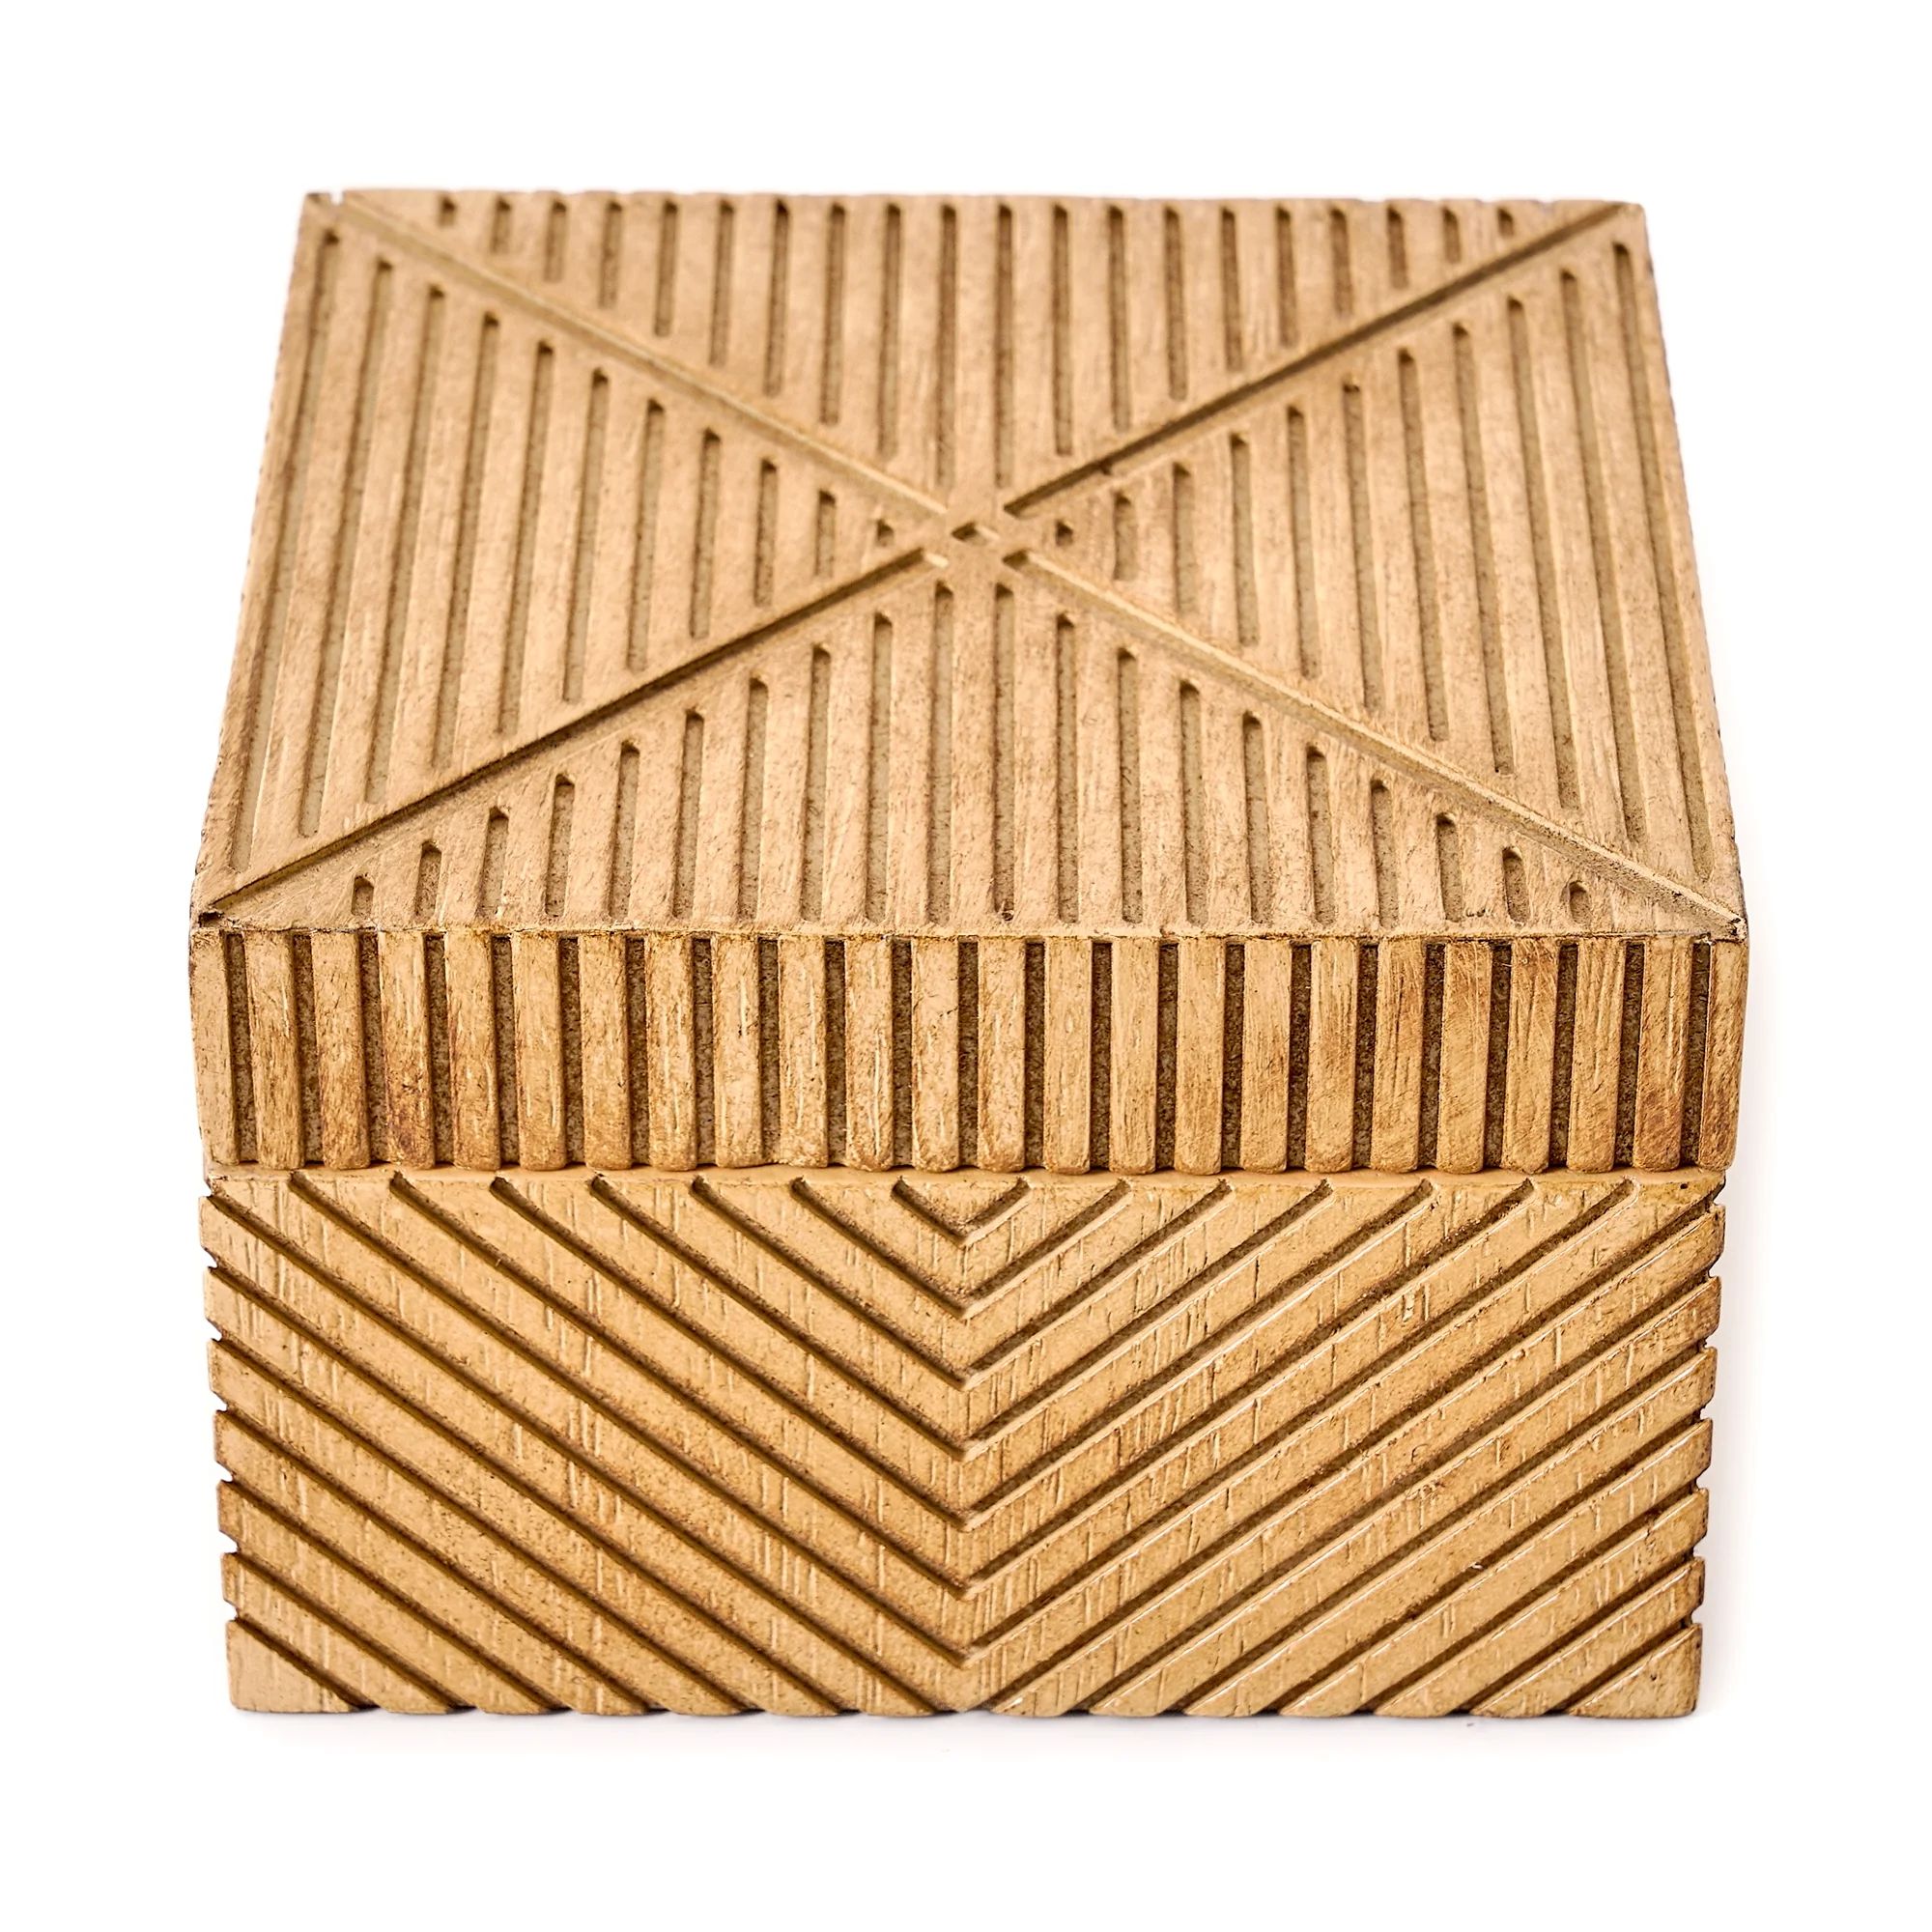 Beautiful Medium Decorative Wooden Box by Drew Barrymore 3.75" X 5.75" | Walmart (US)